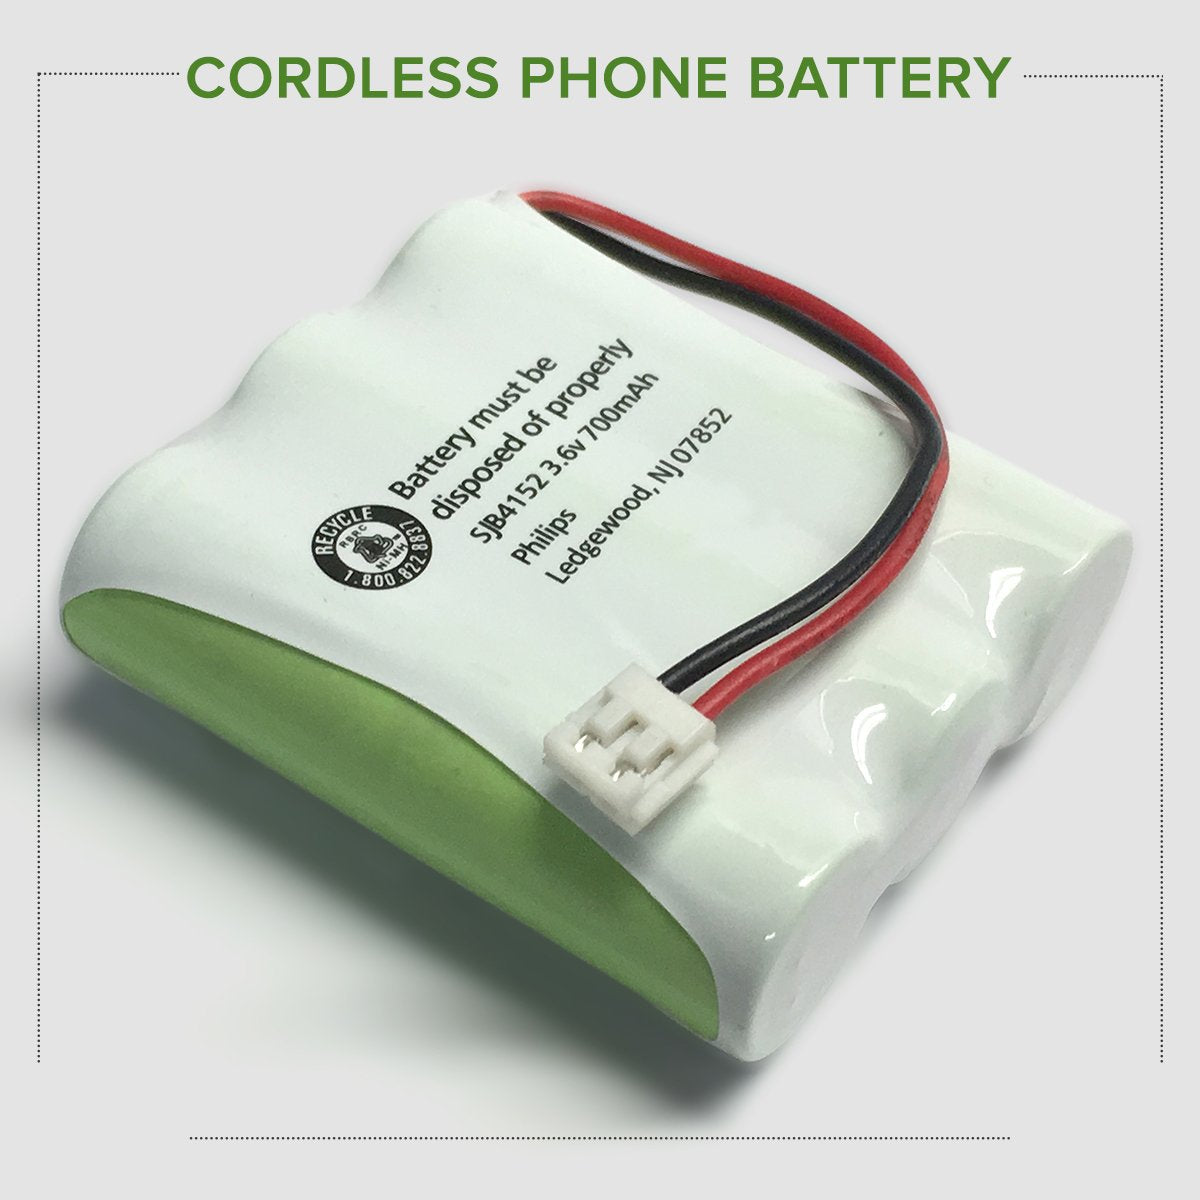 GE 2-5841 Cordless Phone Battery